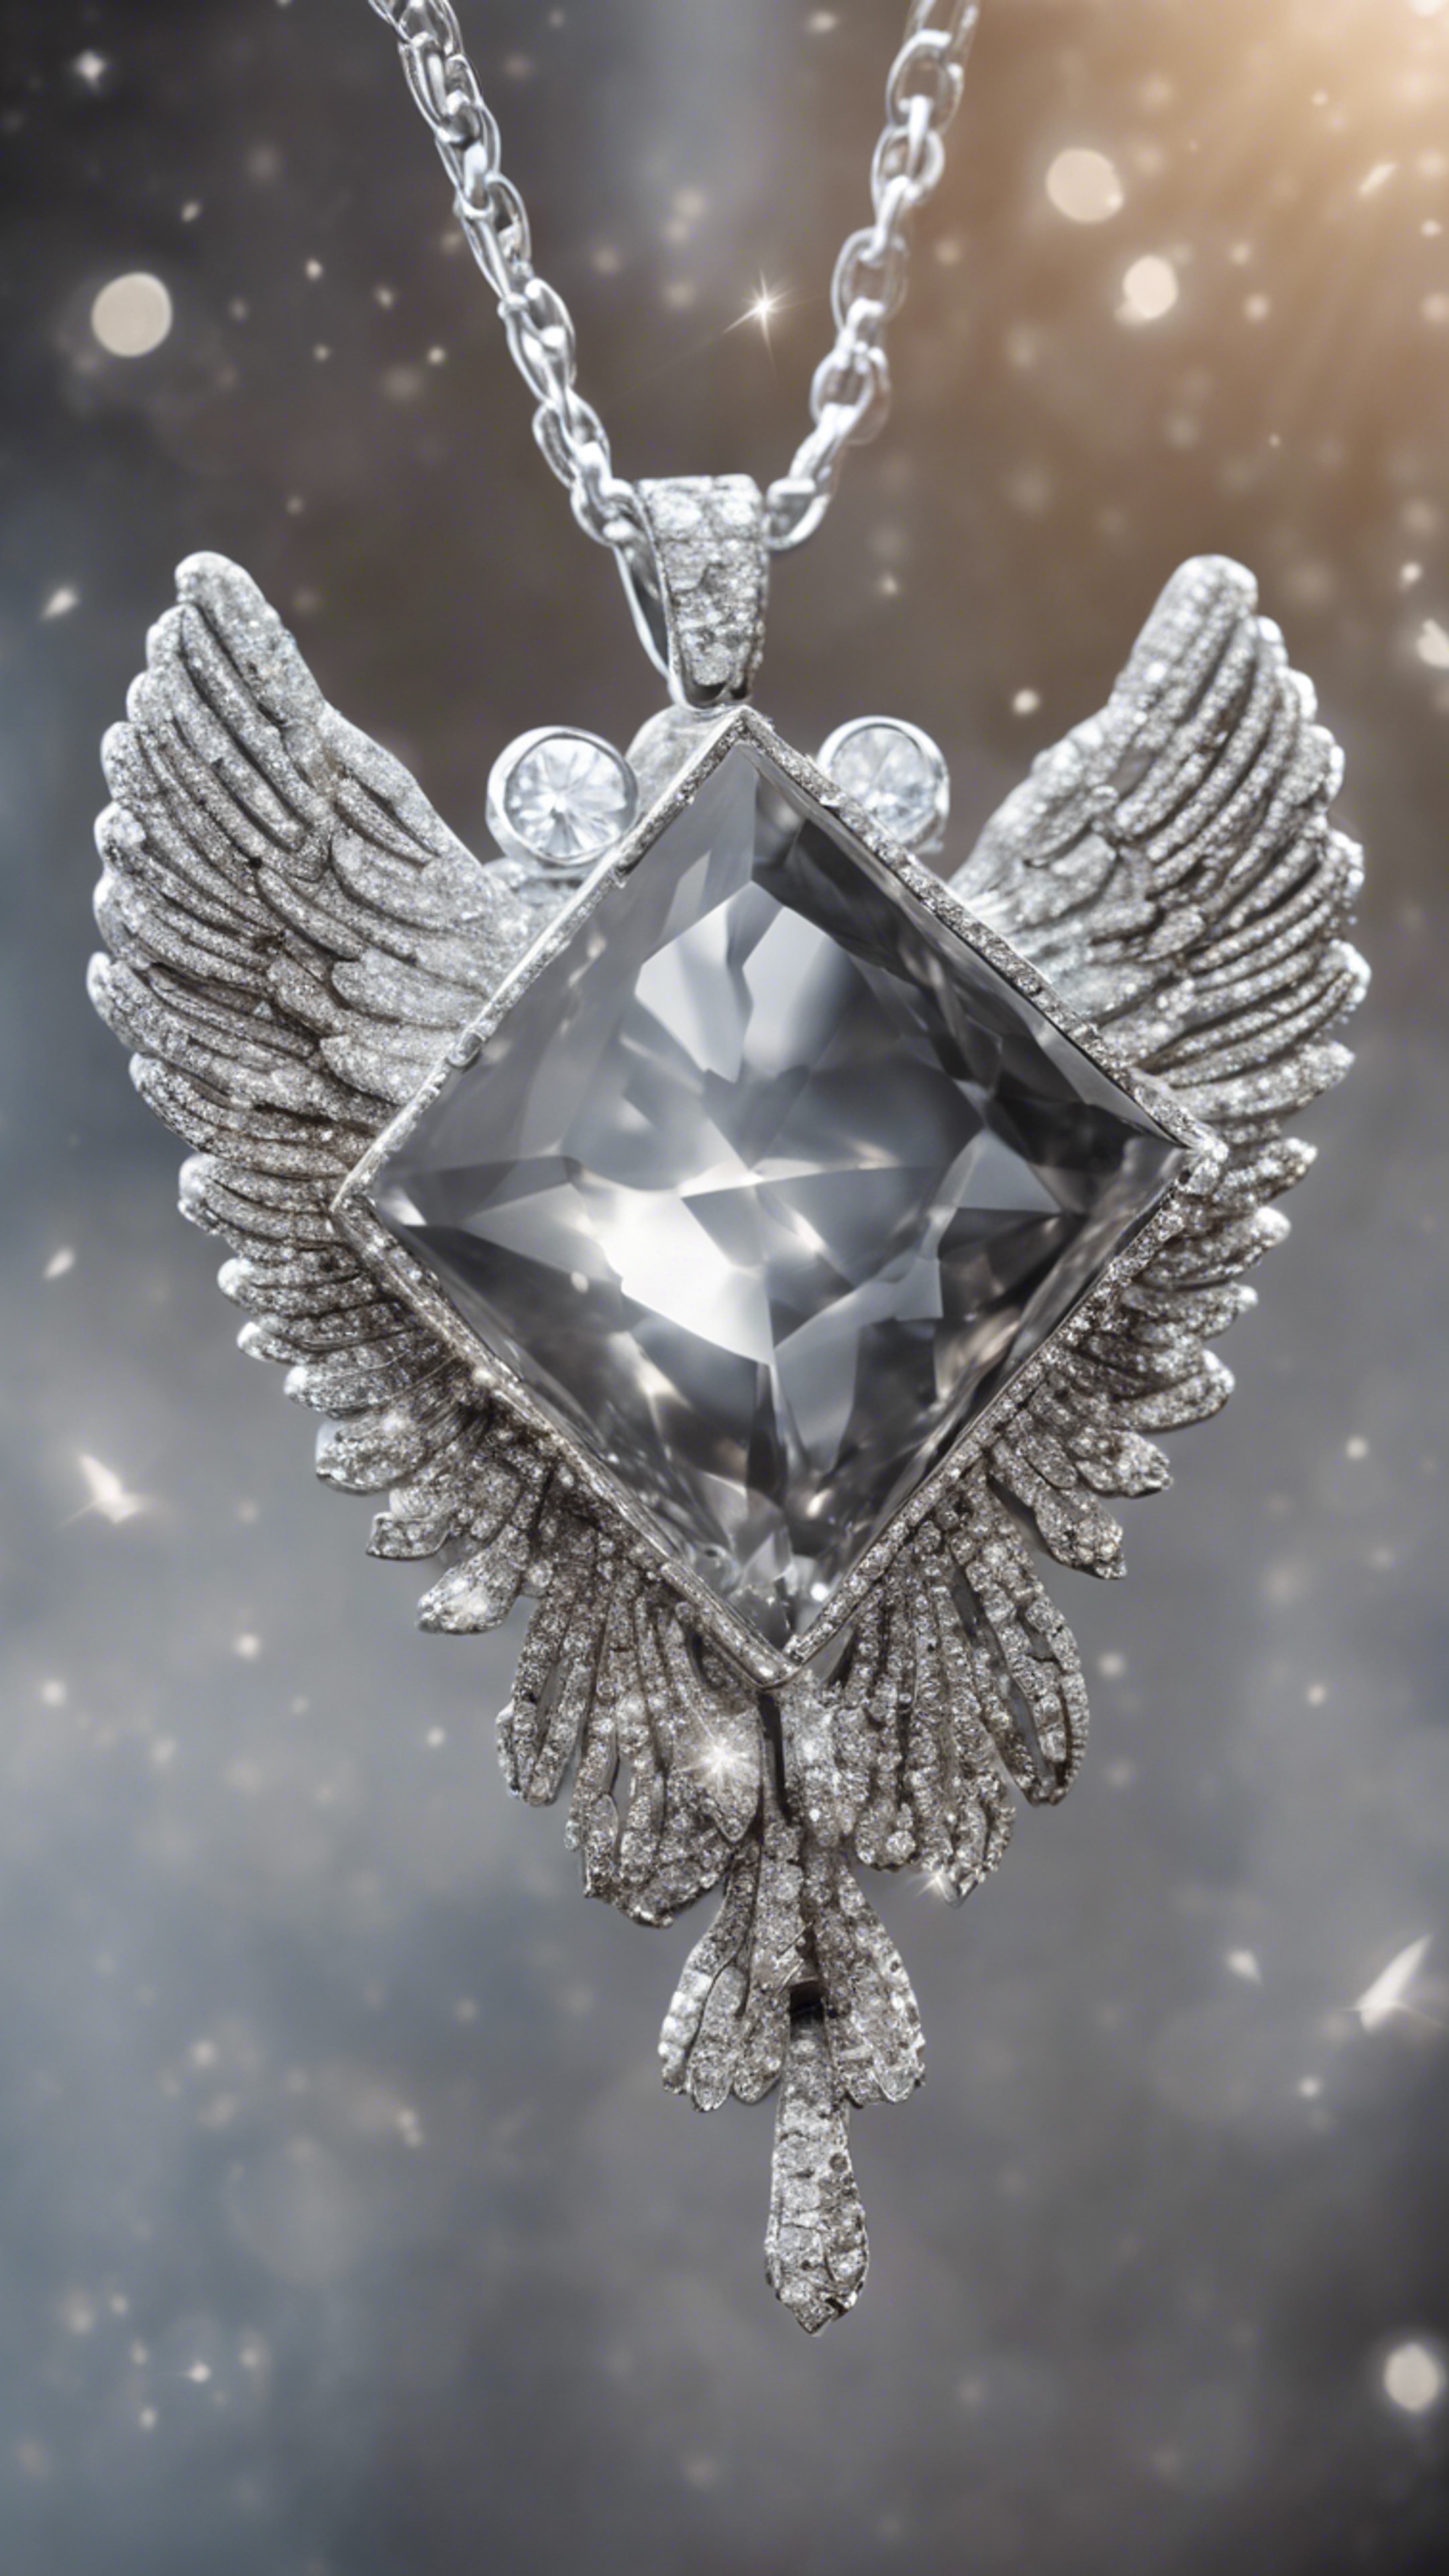 A gray diamond wrapped in the wings of a silver angel pendant. Hintergrund[ad1b9e387c144e34b8b5]